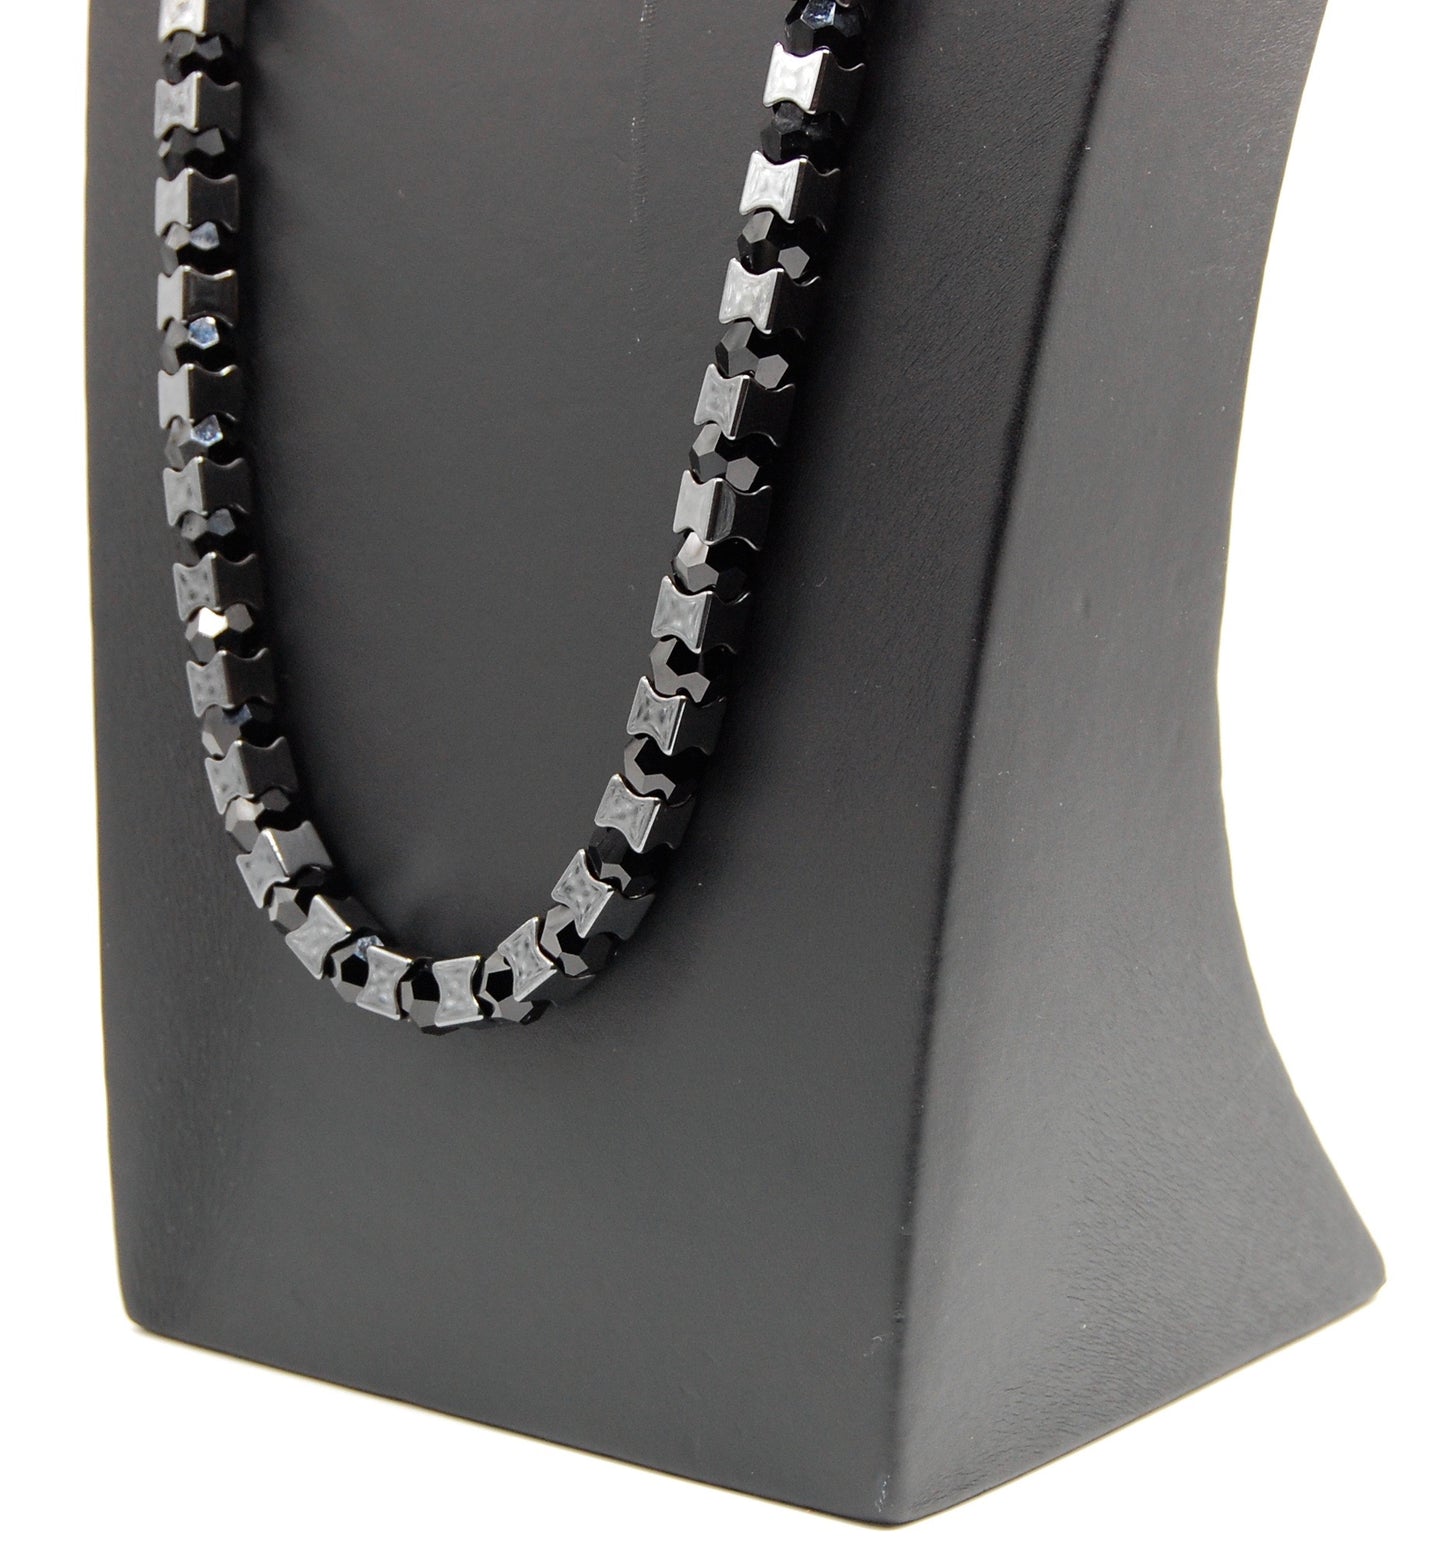 Men's Hematite Crystal Snake Necklace